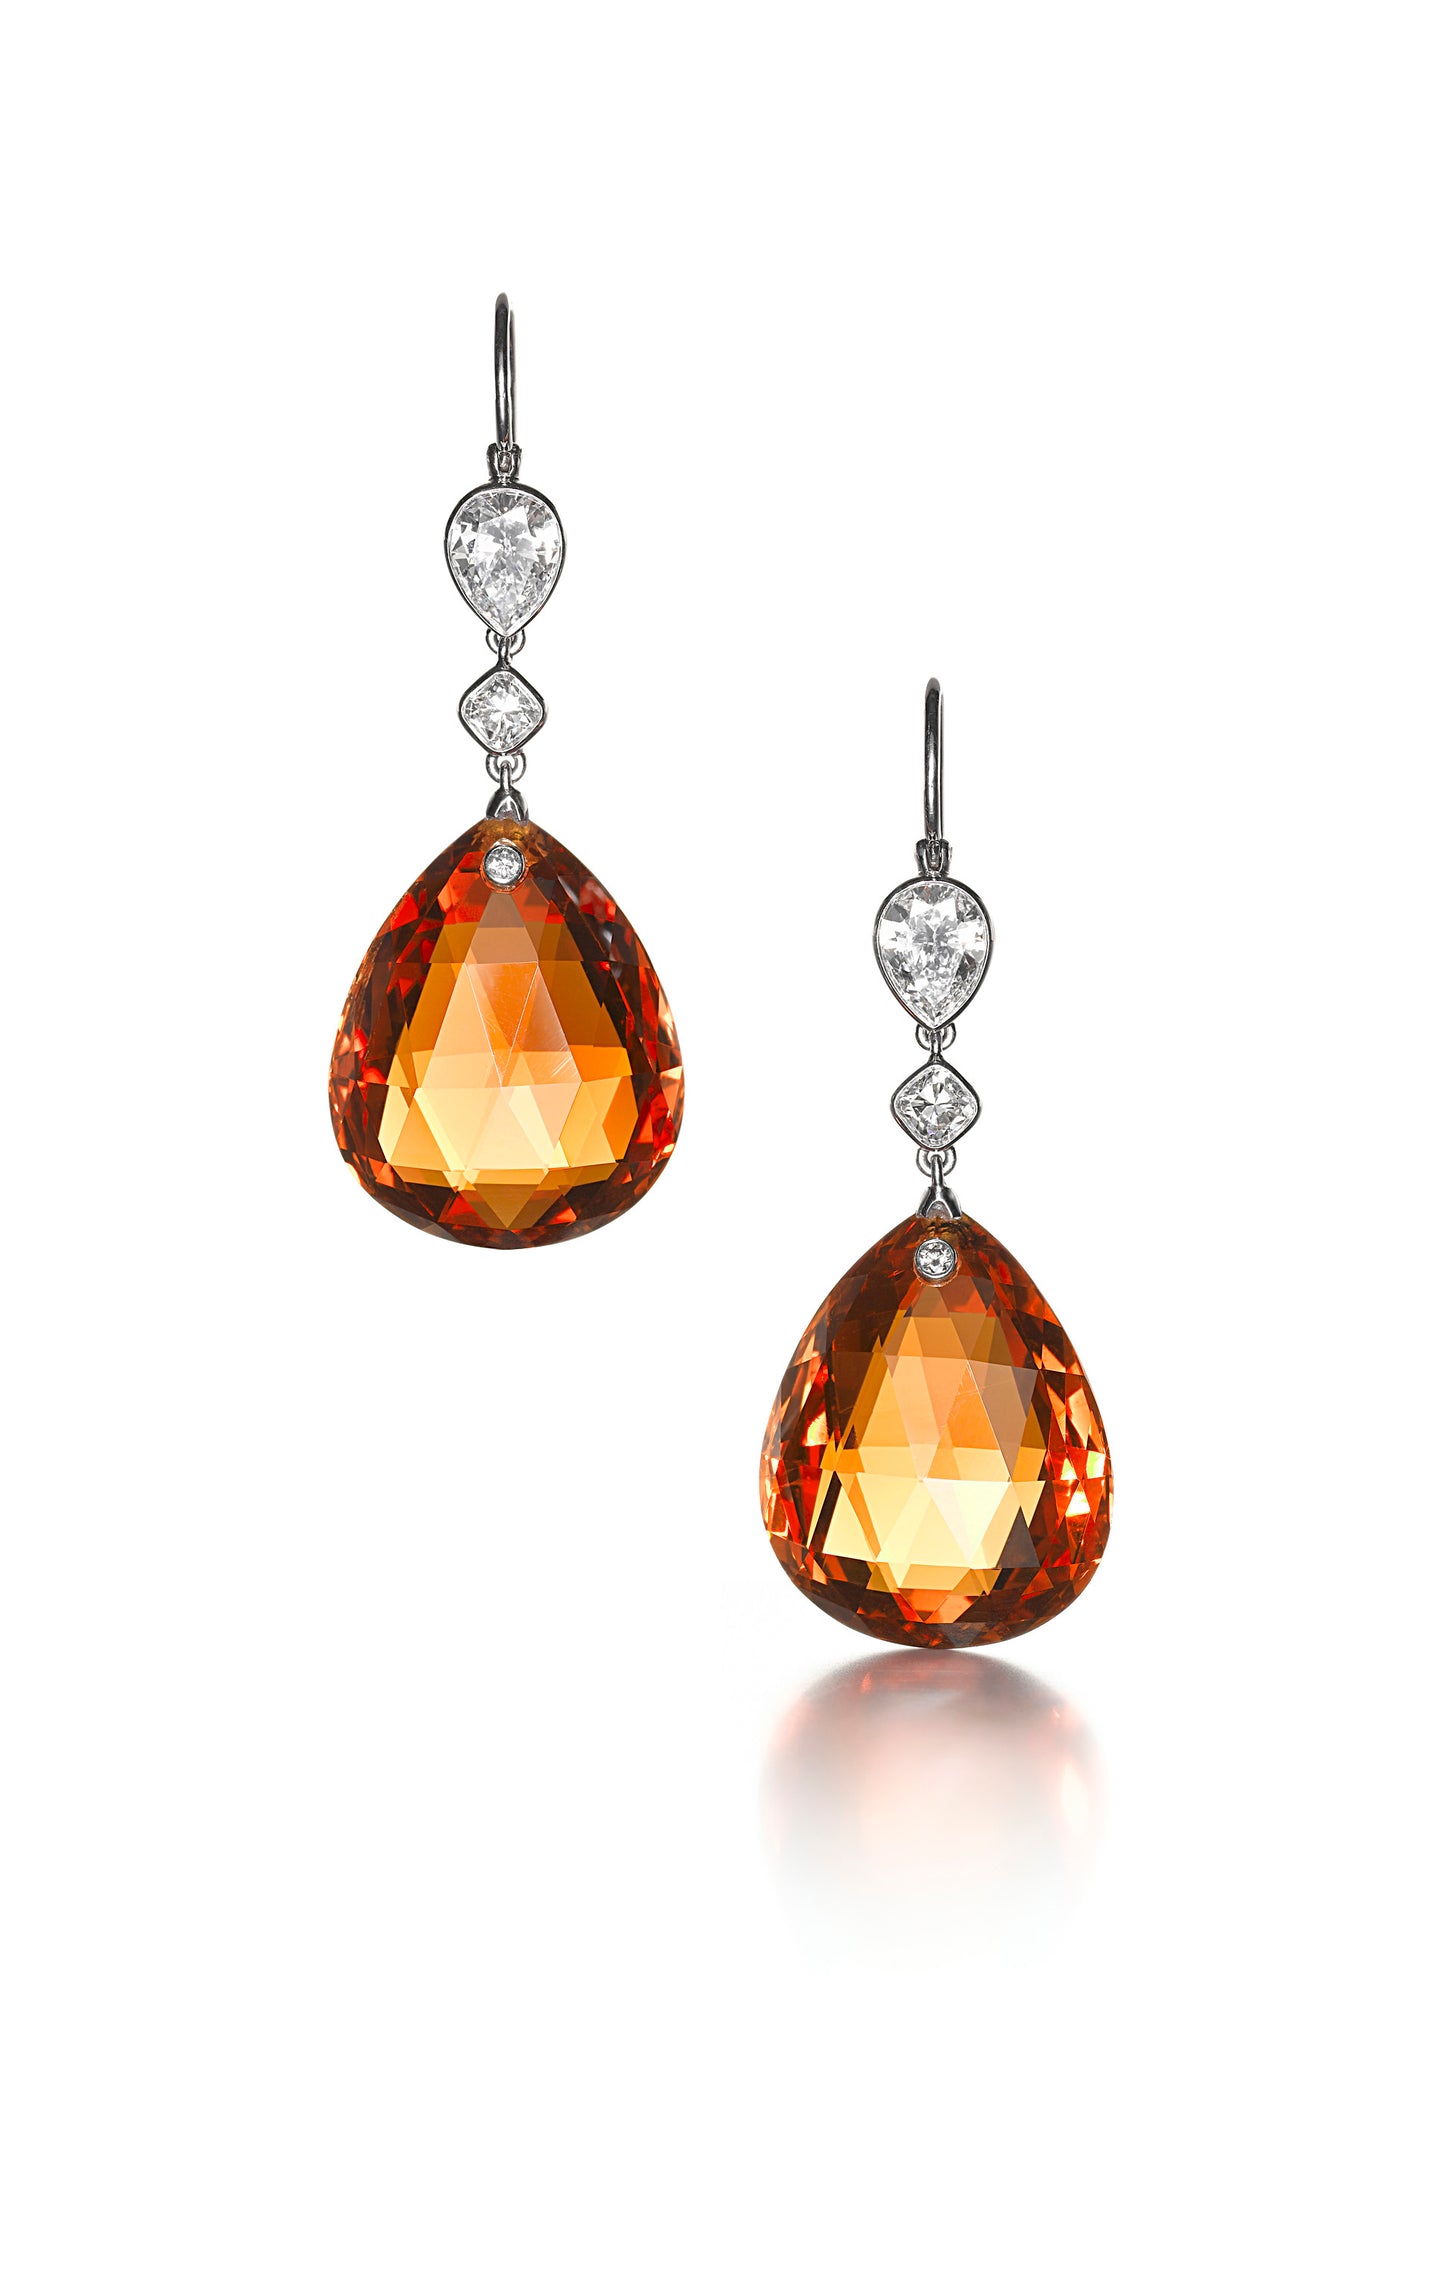 Pair of Spessartine Garnet and Diamond Ear Pendants by Siegelson, New York